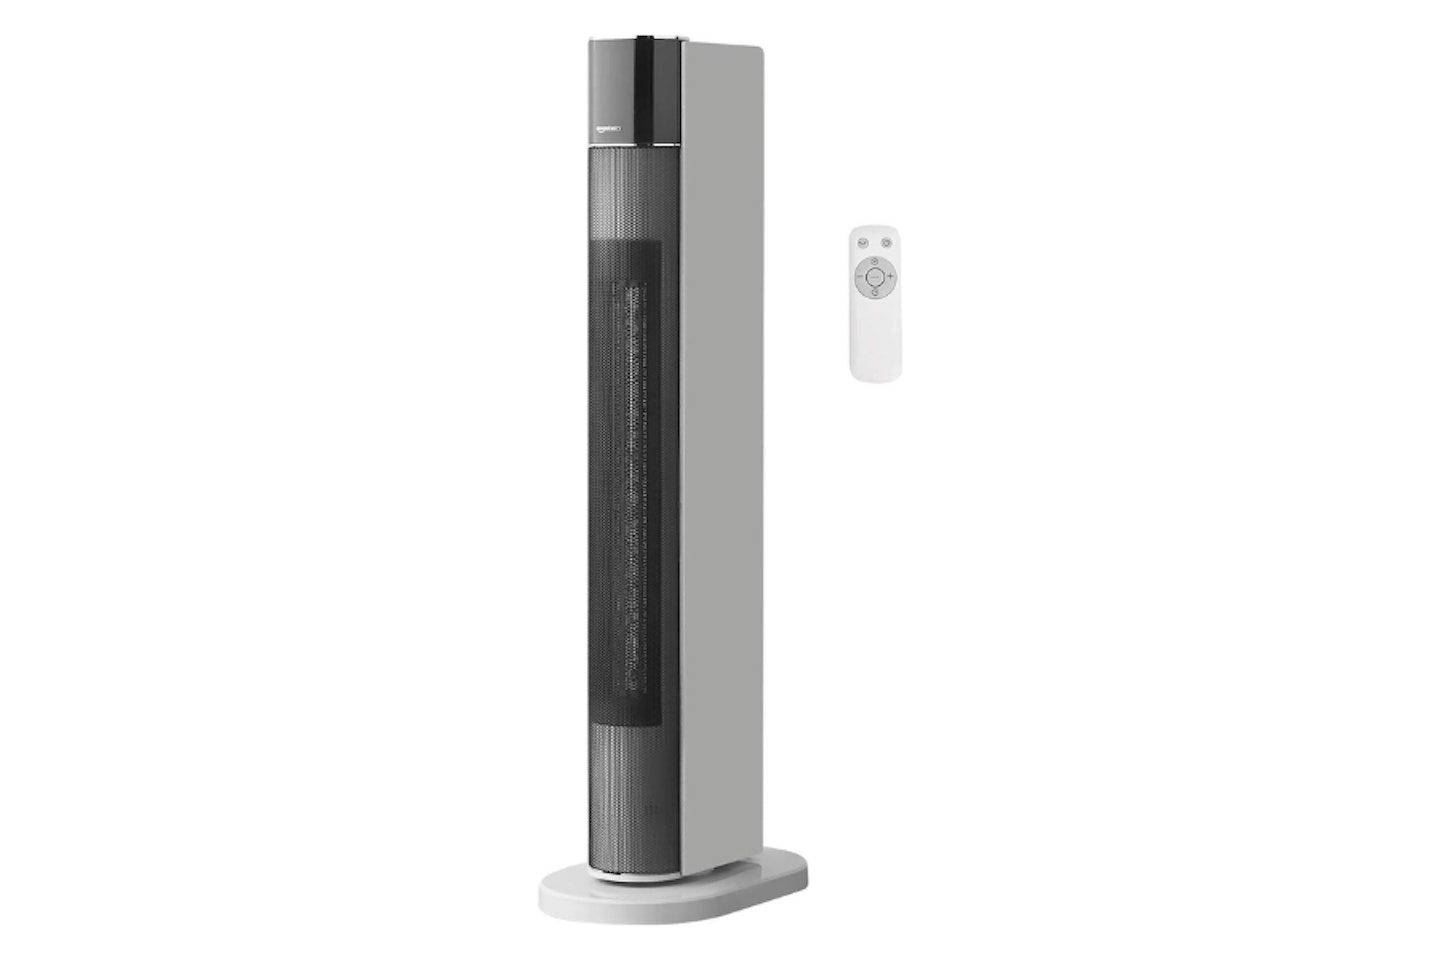 Amazon Basics ECO Oscillating Portable Tower Heater